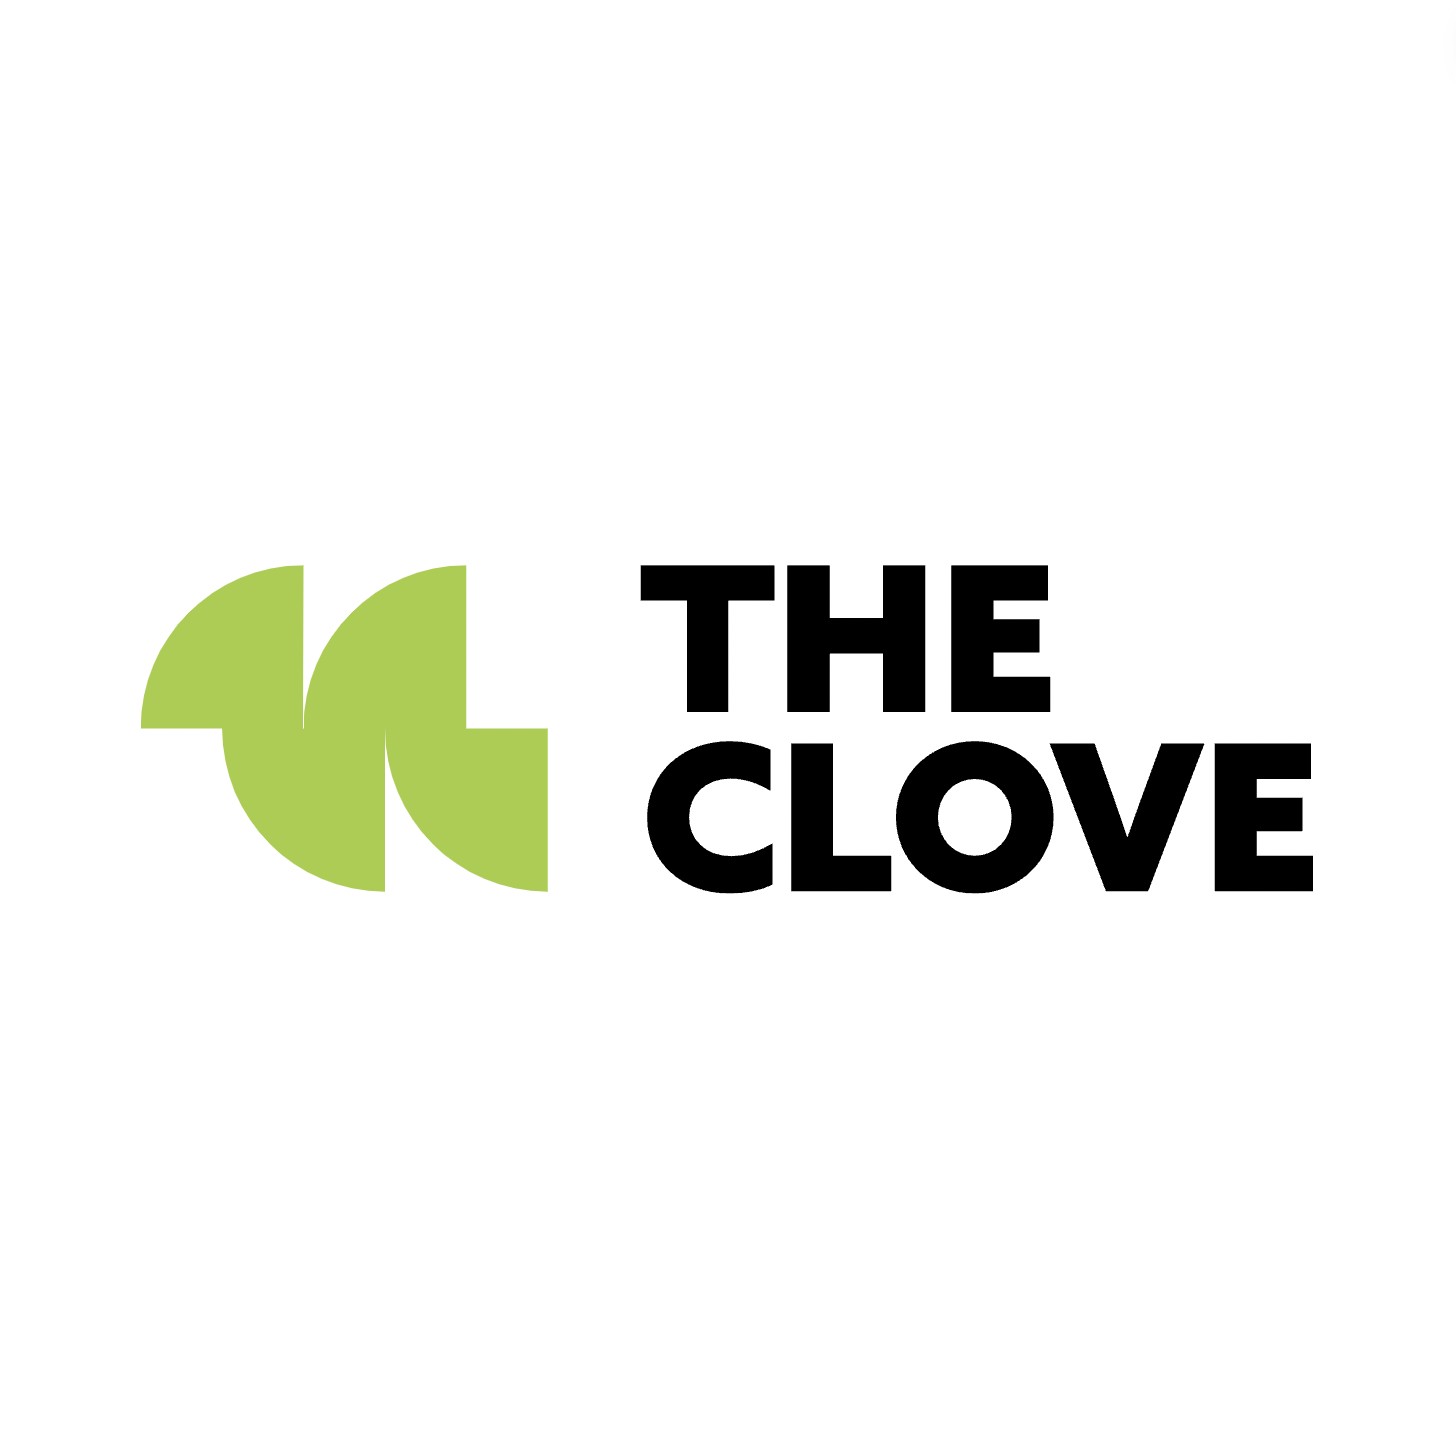 The Clove